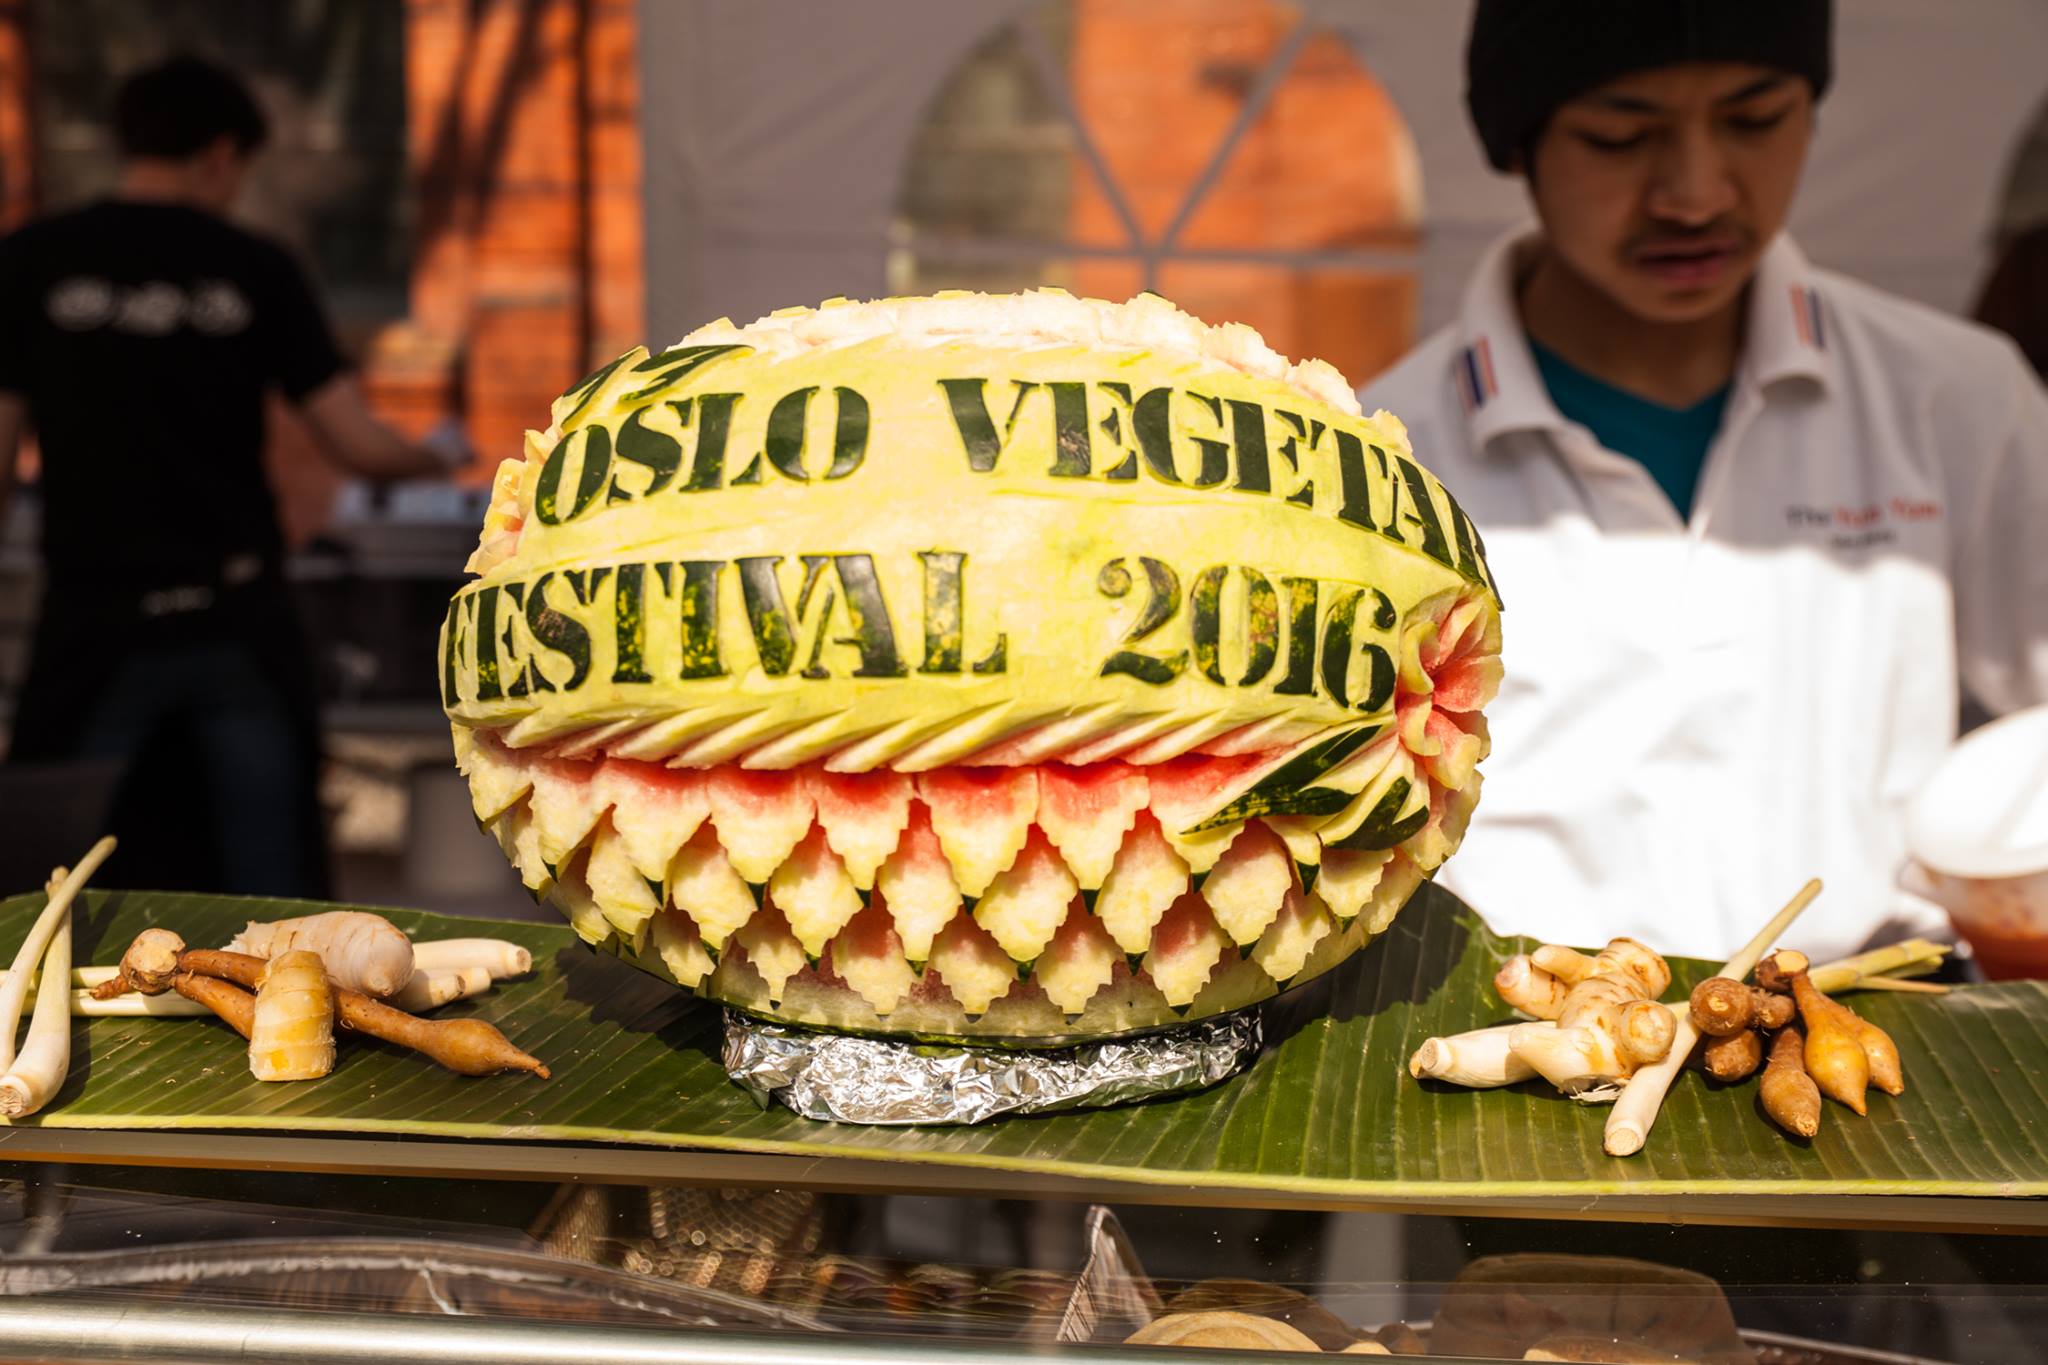 Oslo Vegetarian Festival 2016